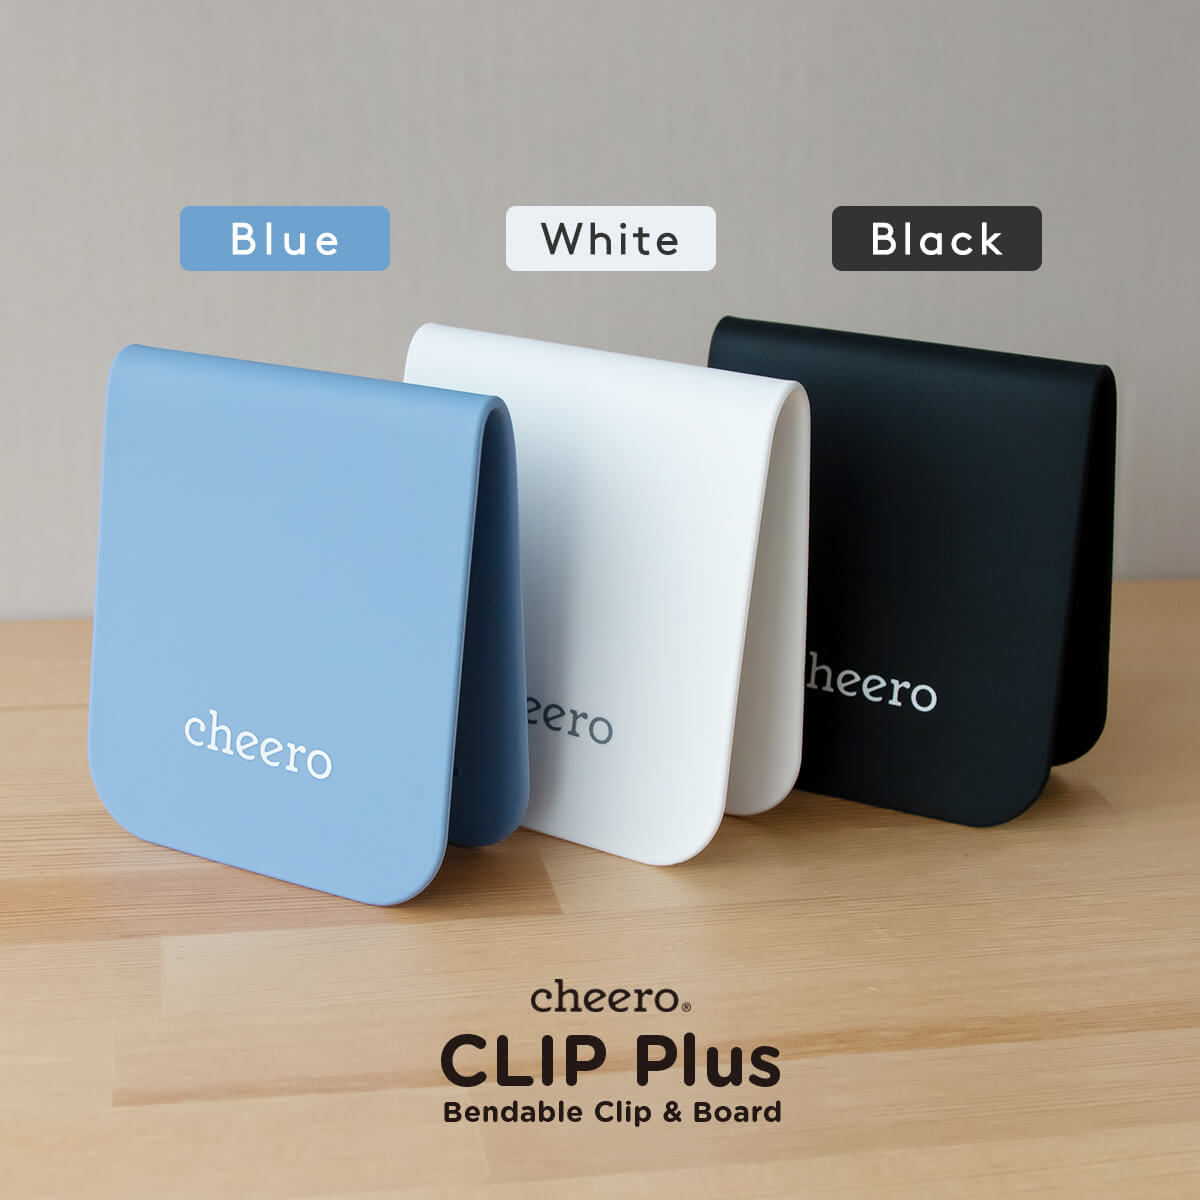 cheero CLIP Plus 万能 クリップ ボード